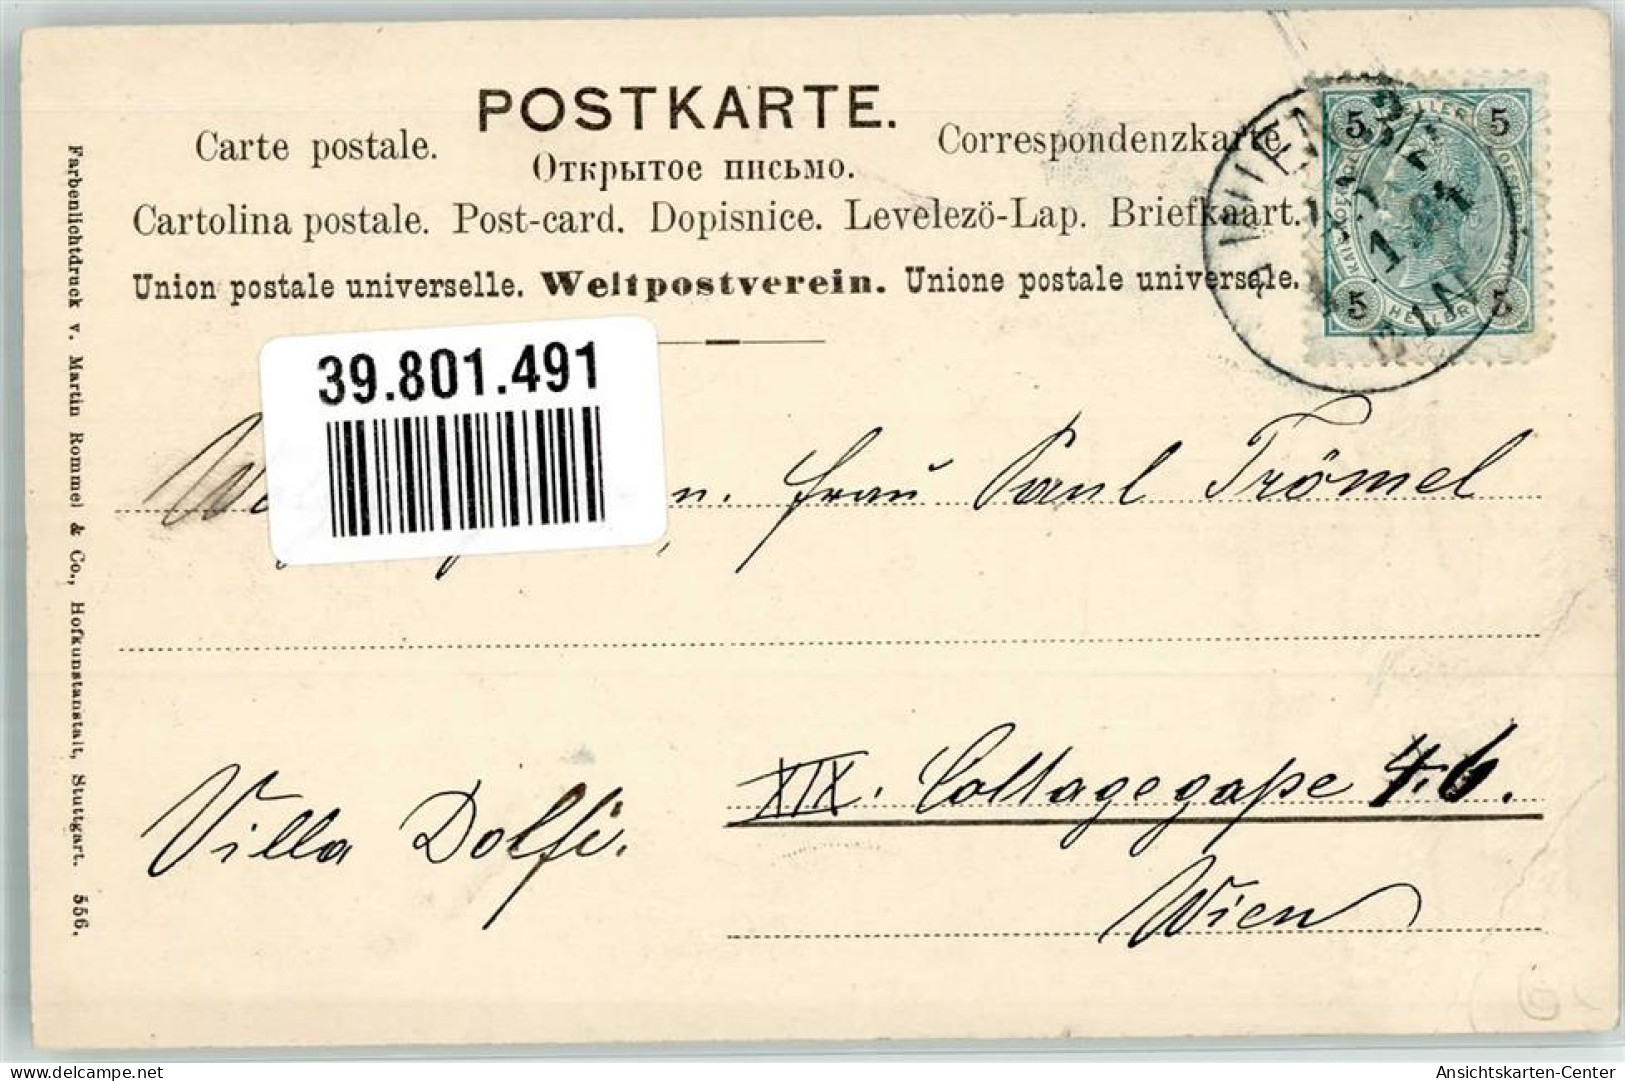 39801491 - Kleeblaetter Hummeln Verlag Rommel Nr.556 - Anno Nuovo